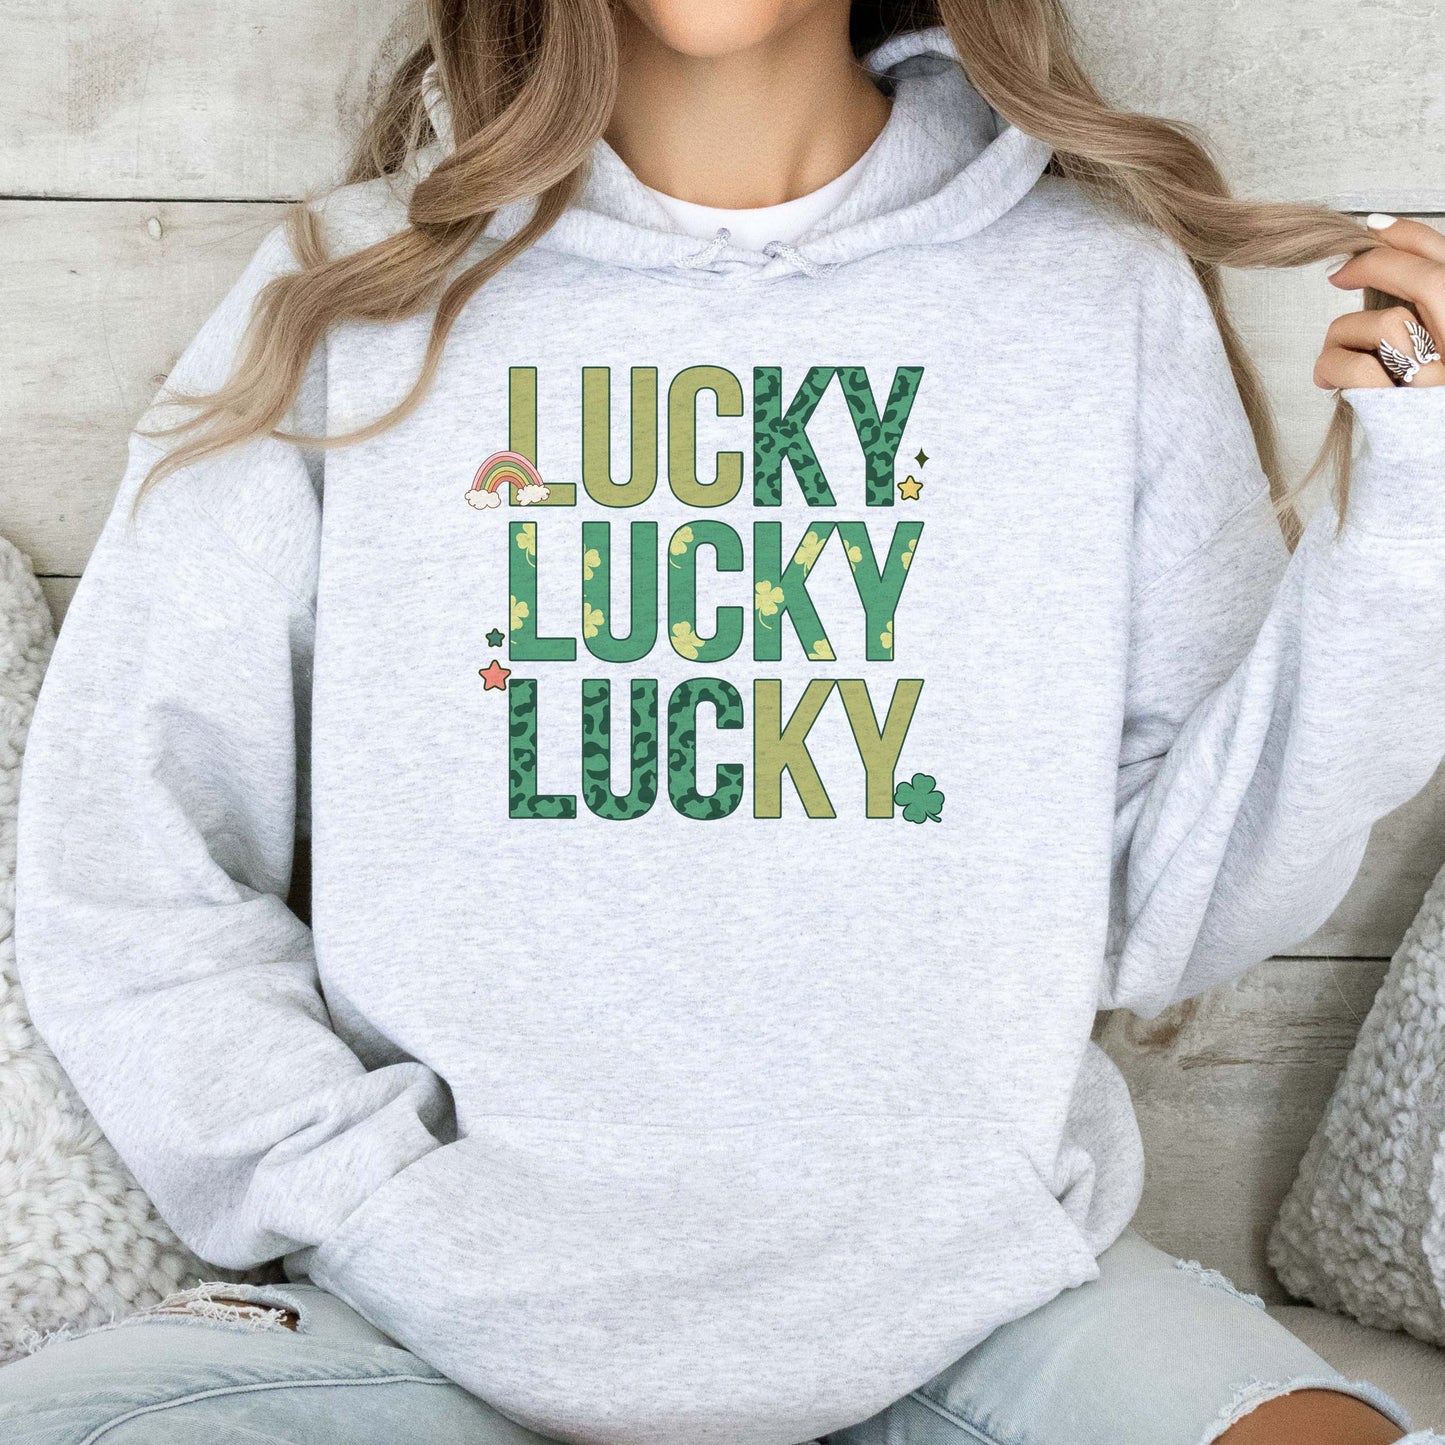 Lucky Lucky Lucky Sweatshirts